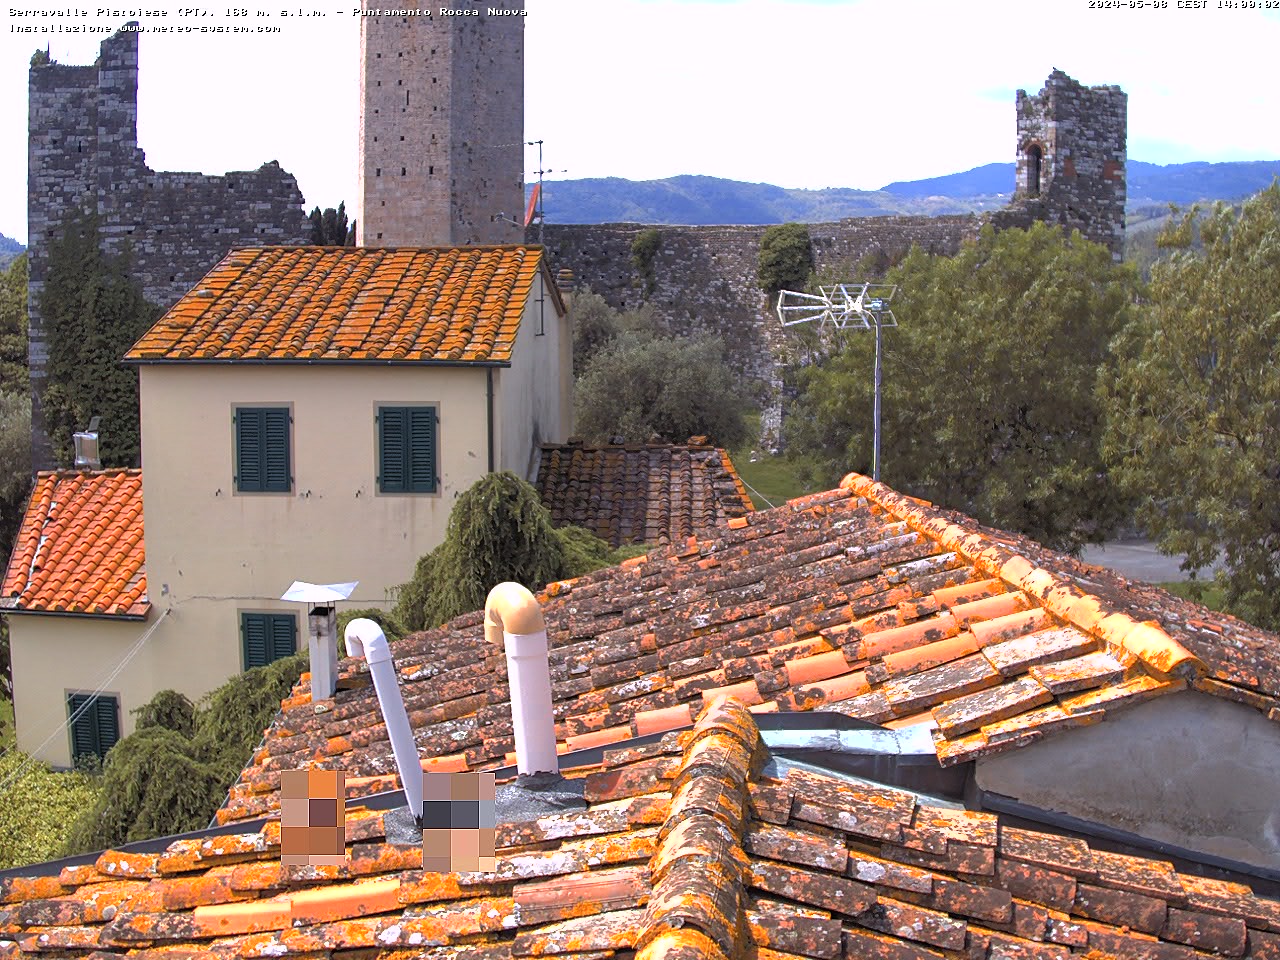 webcam Serravalle Pistoiese (PT)